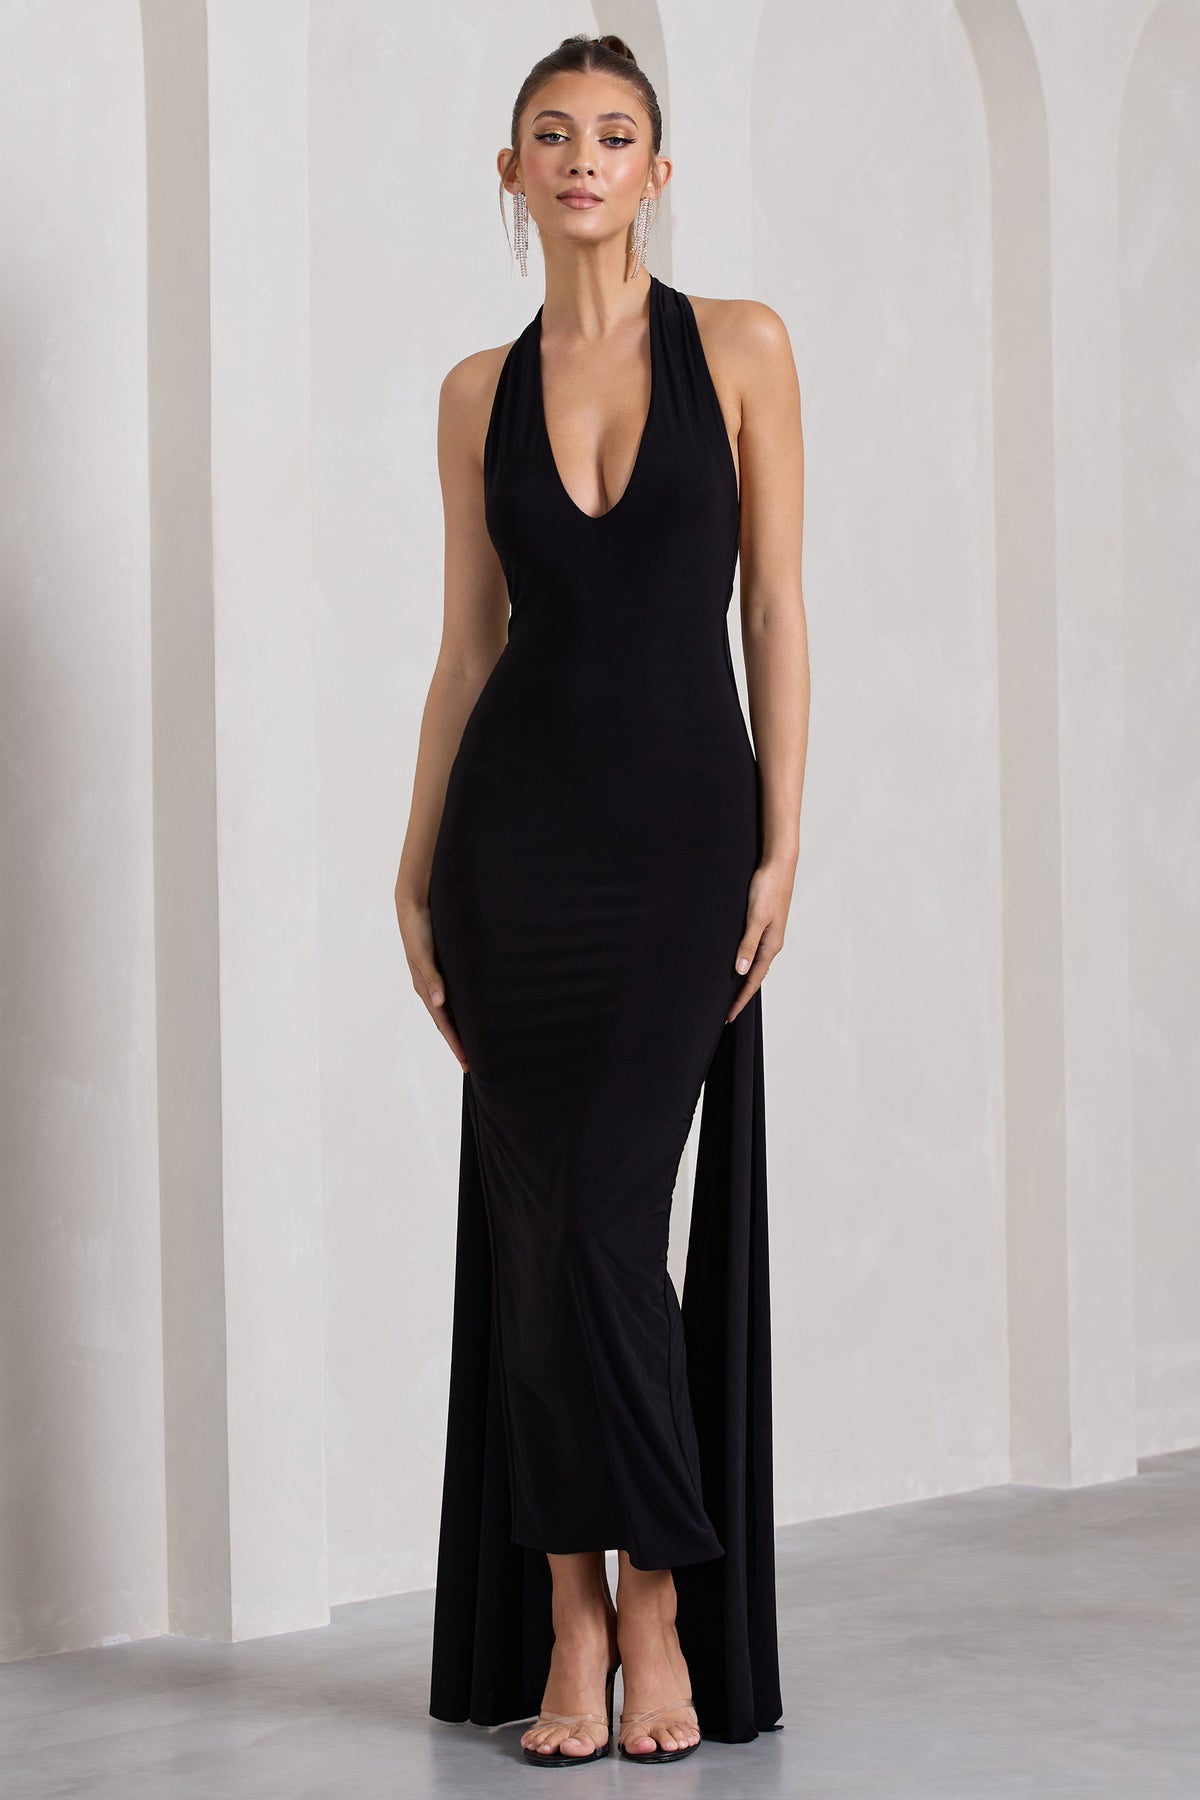 Black Sleeveless Maxi Dress - Chic Maxi Dress - Slit Maxi Dress